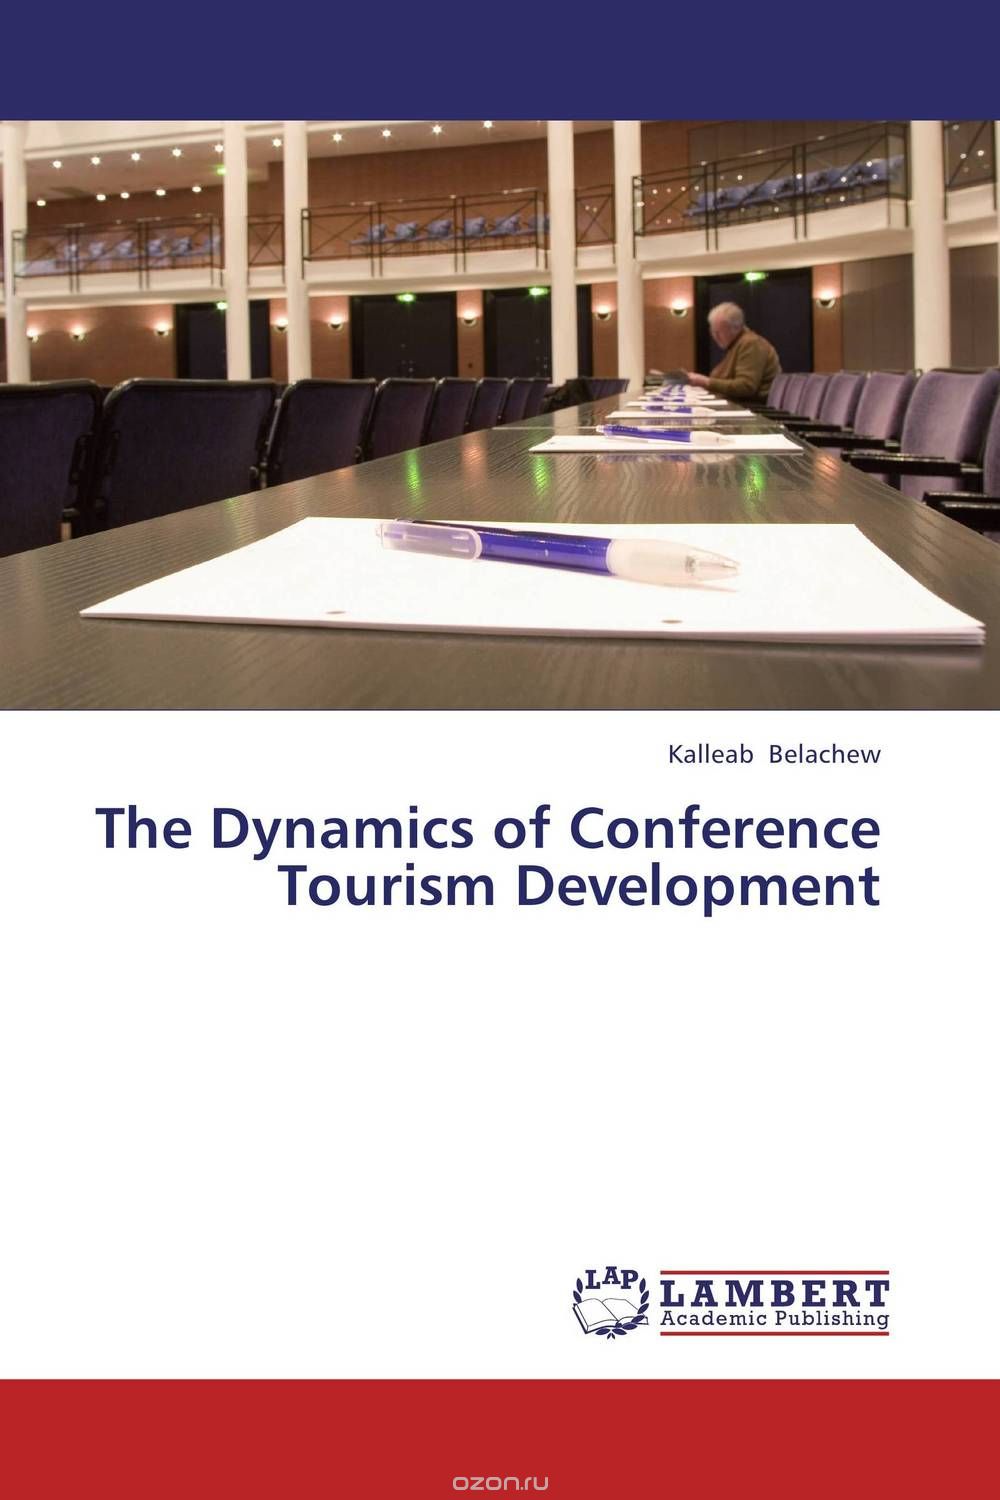 Скачать книгу "The Dynamics of Conference Tourism Development"